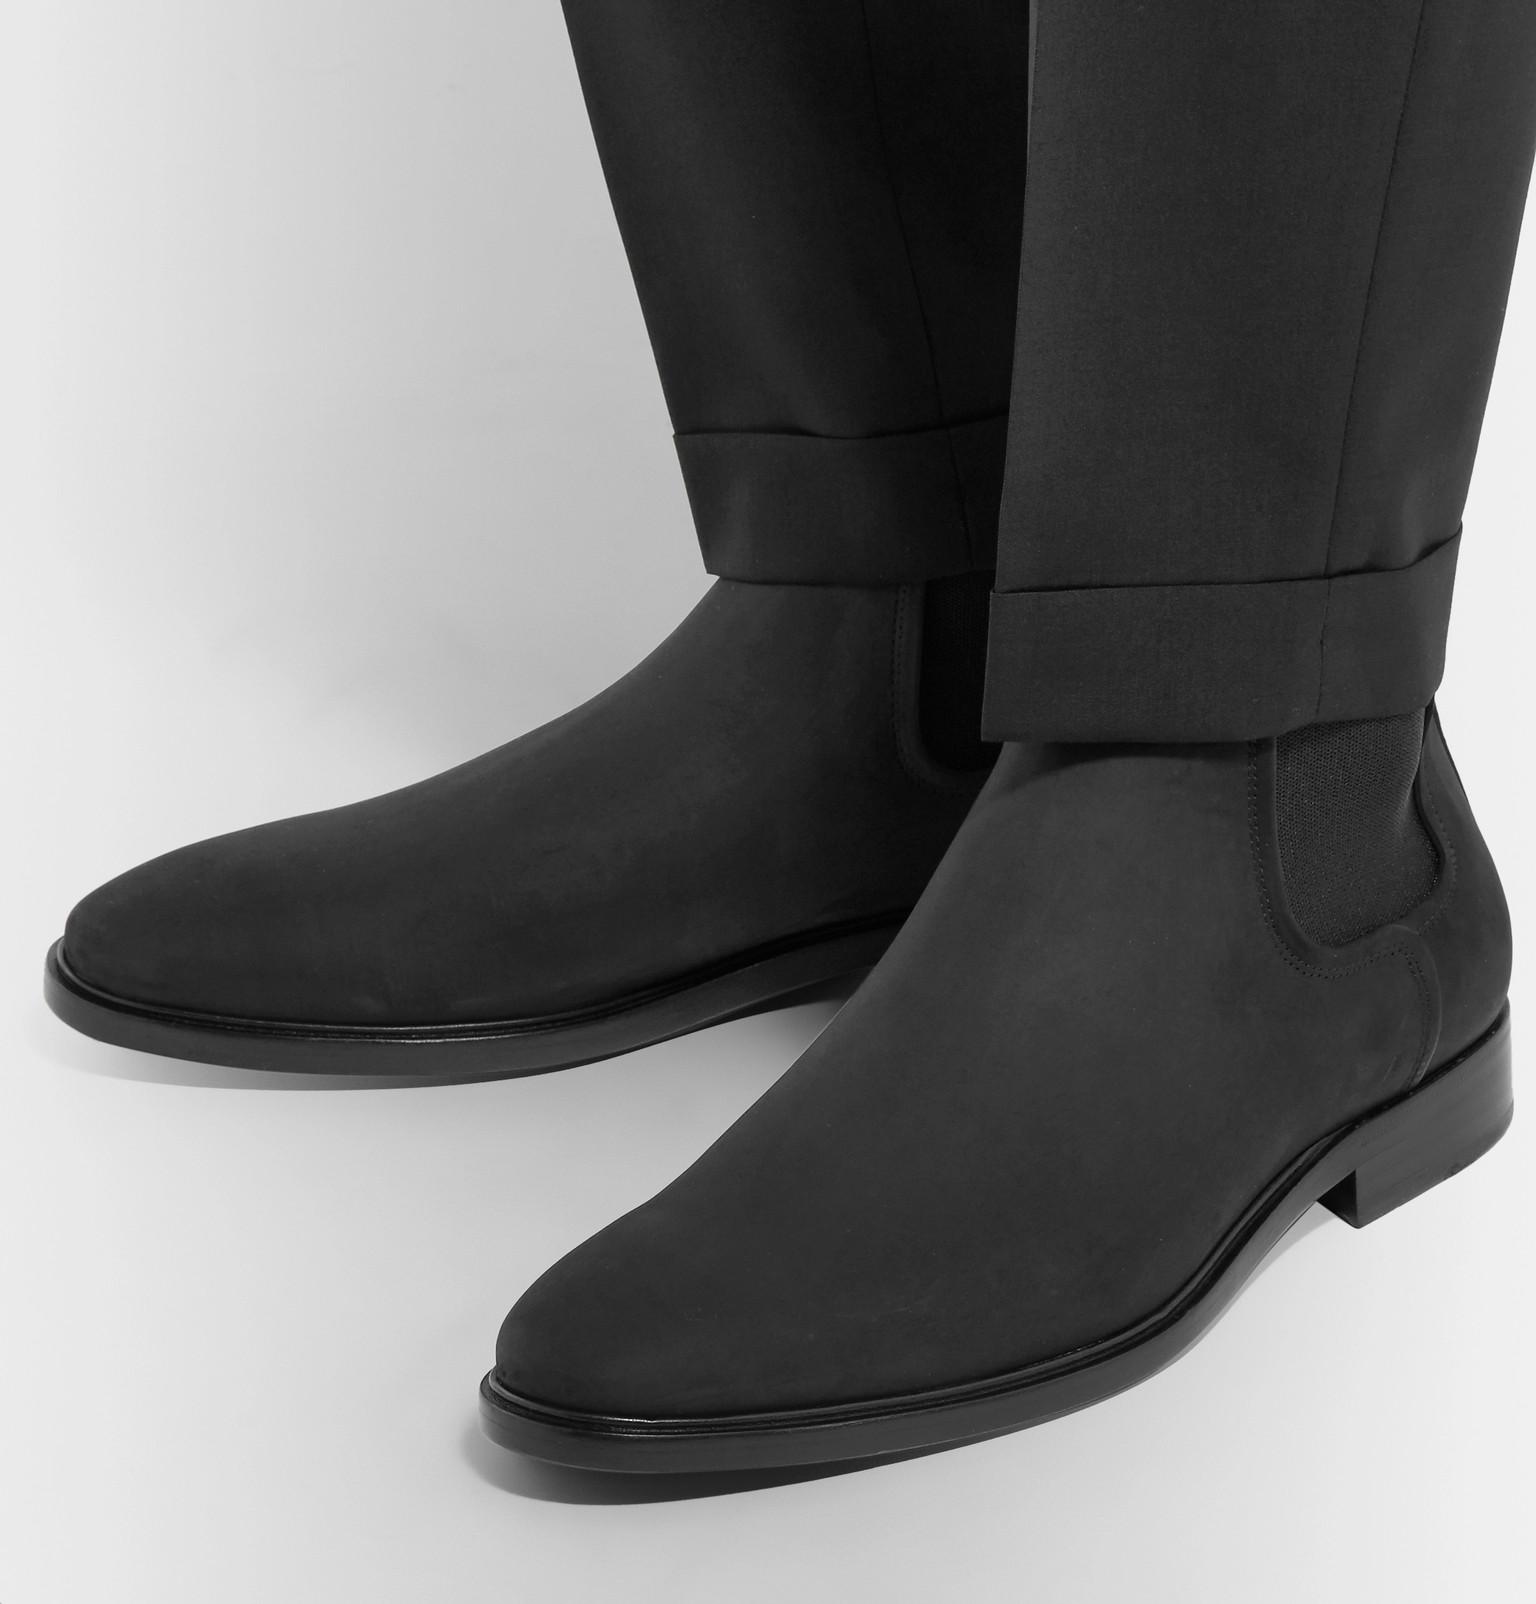 Lanvin Nubuck Chelsea Boots in Black for Men - Lyst